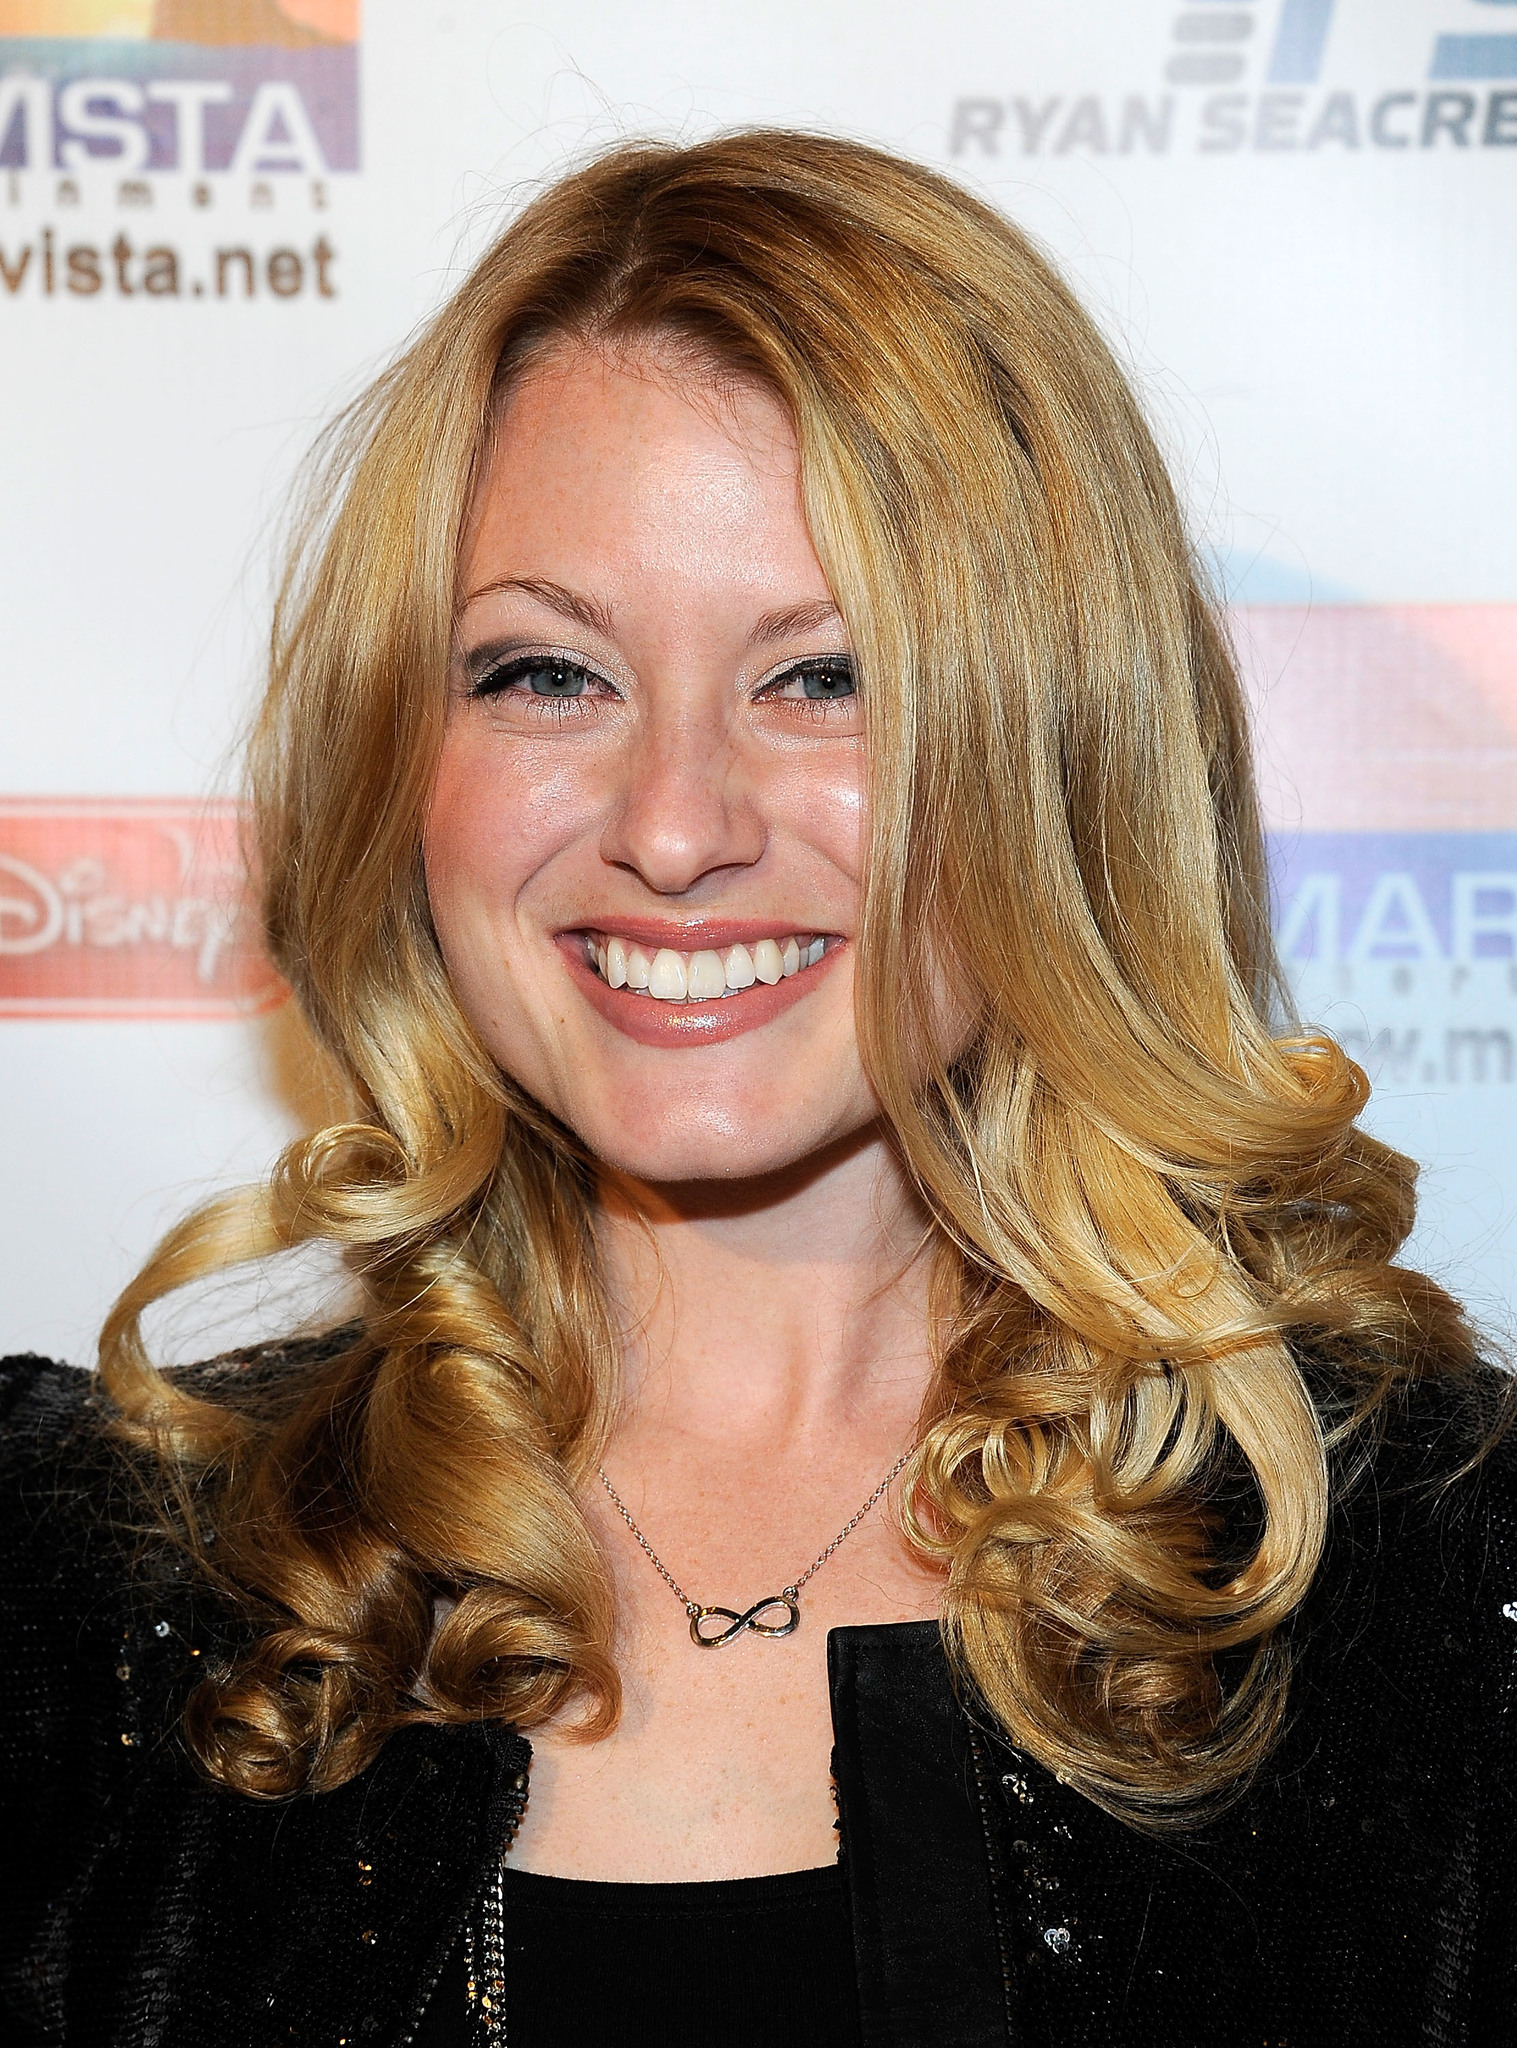 Christie Brooke at event of Radio Rebel (2012)